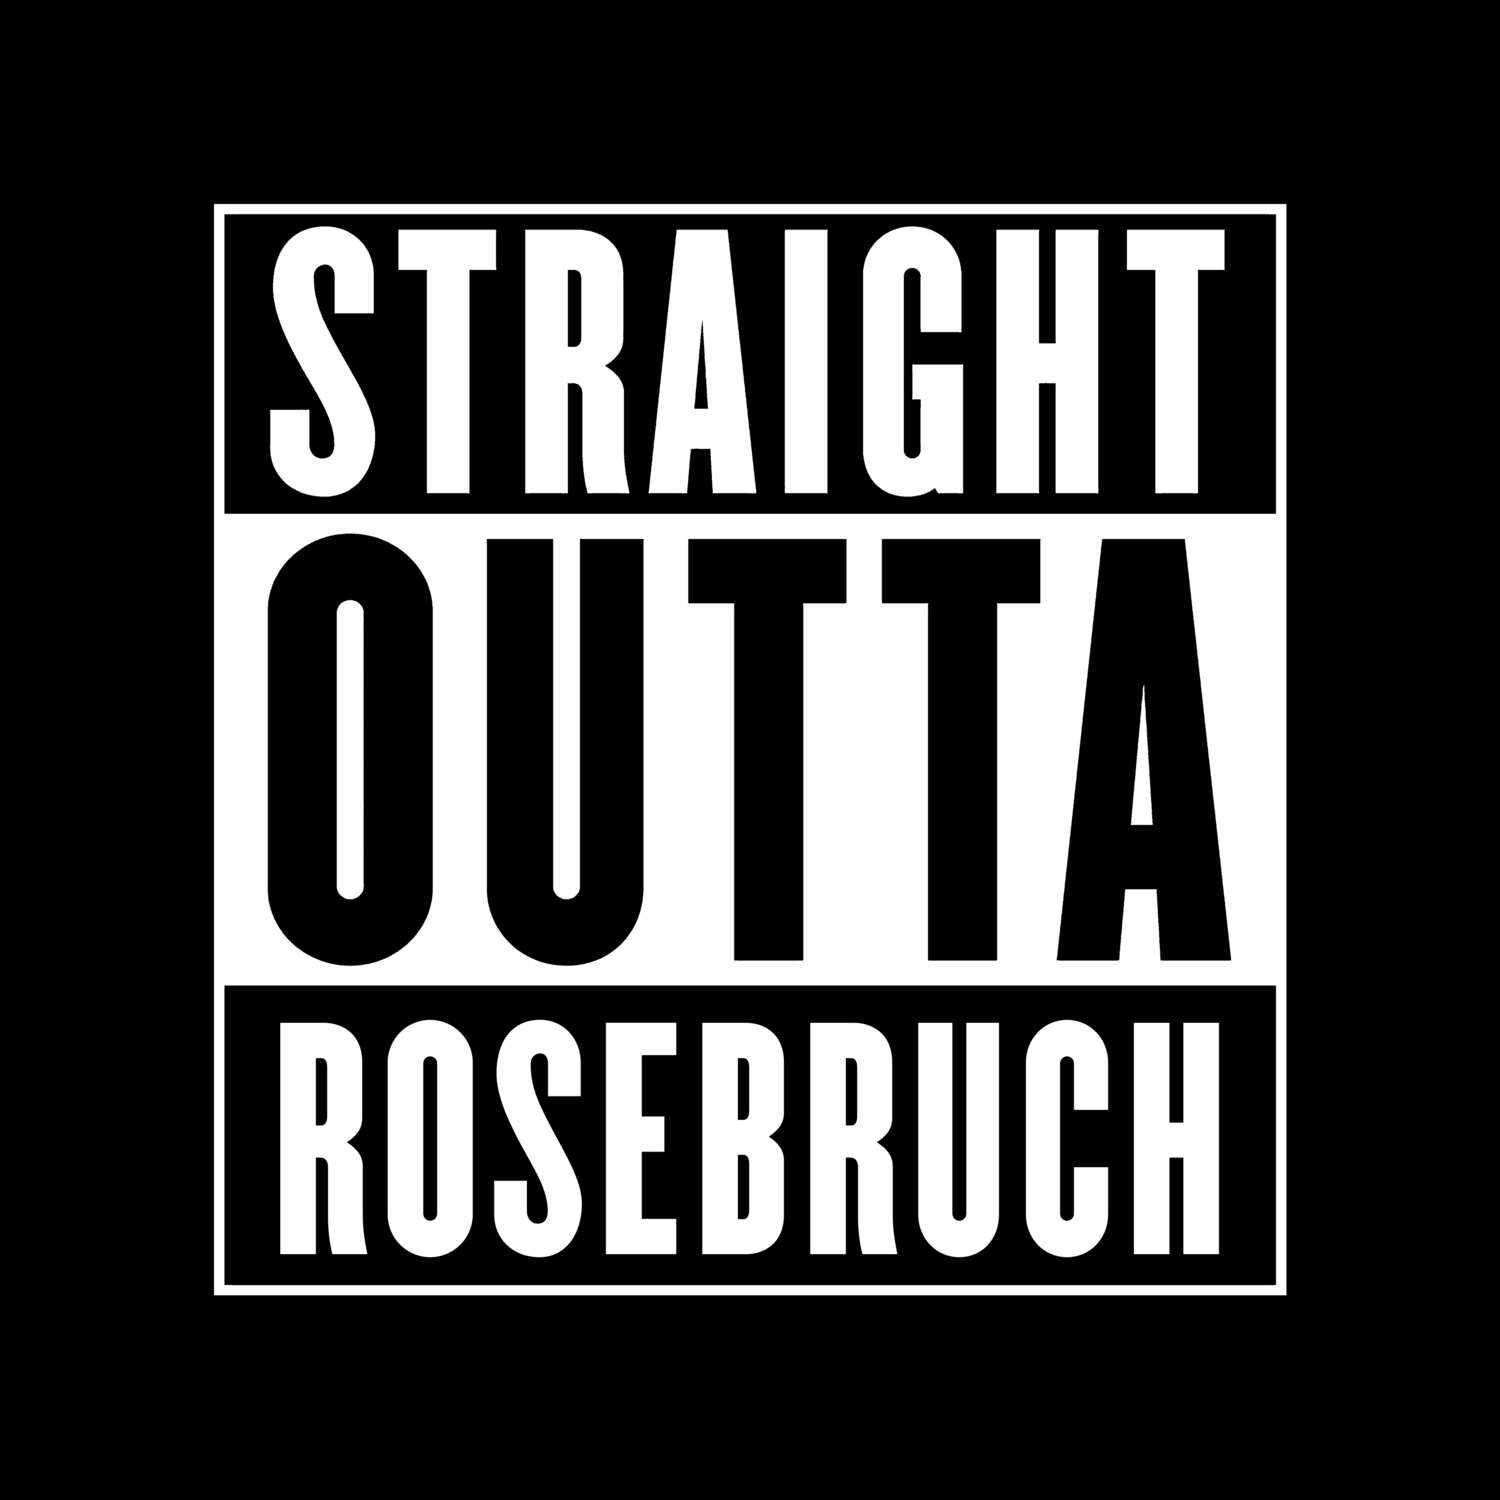 Rosebruch T-Shirt »Straight Outta«